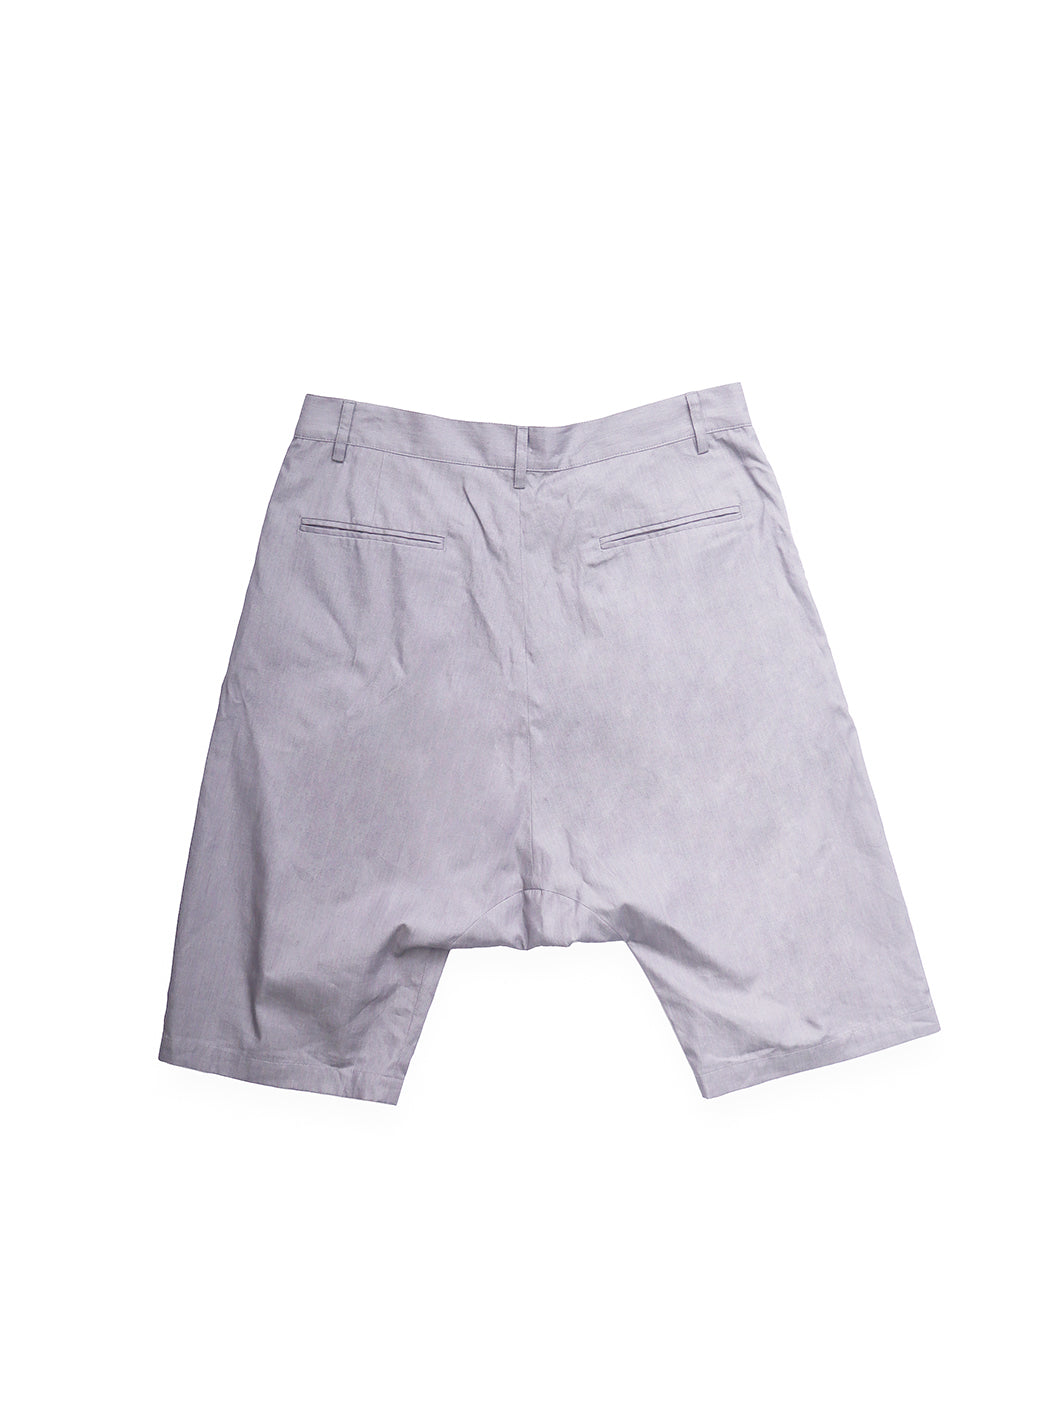 Light Grey Drop Crotch Button Up Shorts